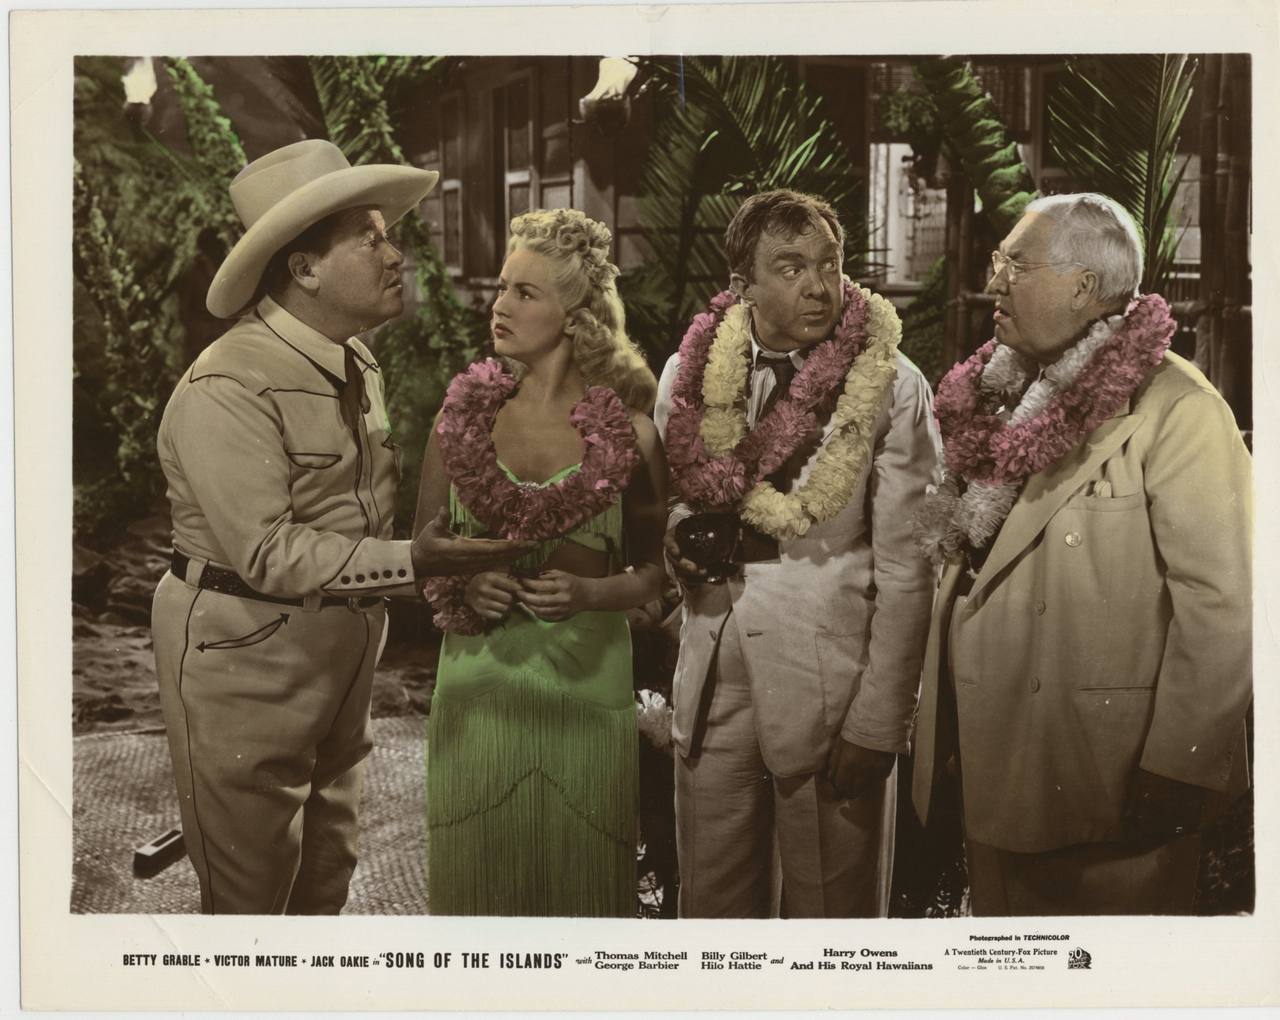  فیلم سینمایی Song of the Islands با حضور توماس میچل، Betty Grable، George Barbier و Jack Oakie